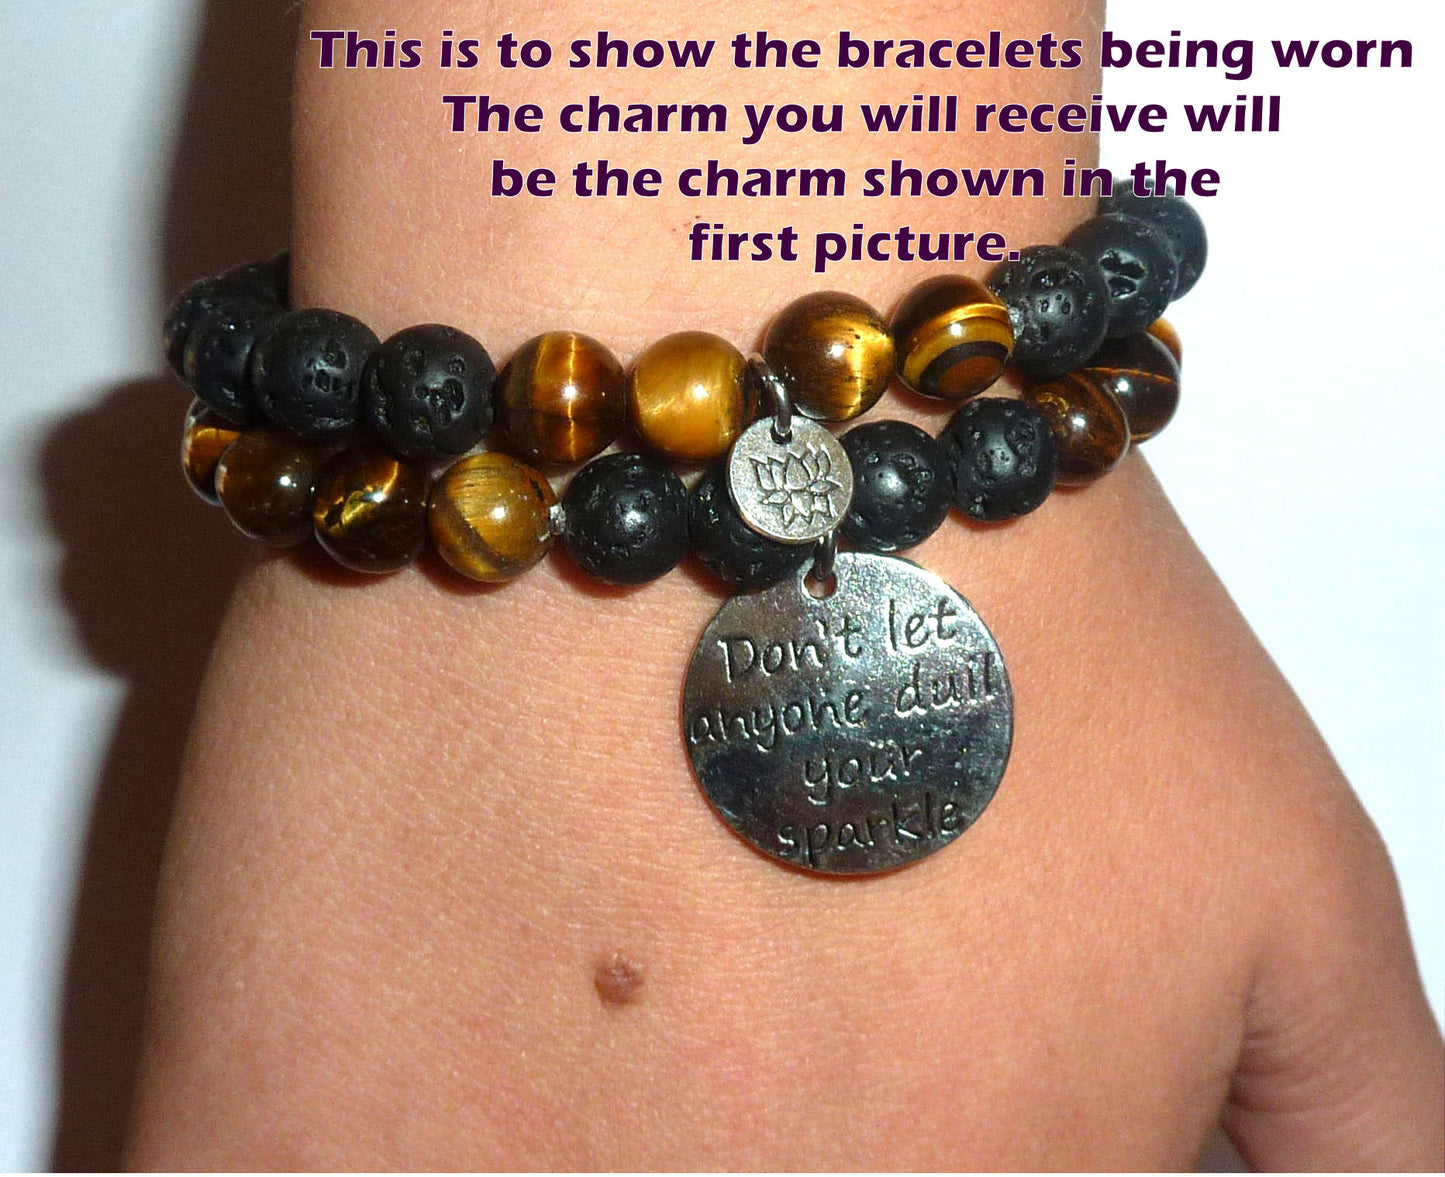 Matron of Honor - Women's Tiger Eye & Black Lava Diffuser Yoga Beads Charm Stretch Bracelet Gift Set